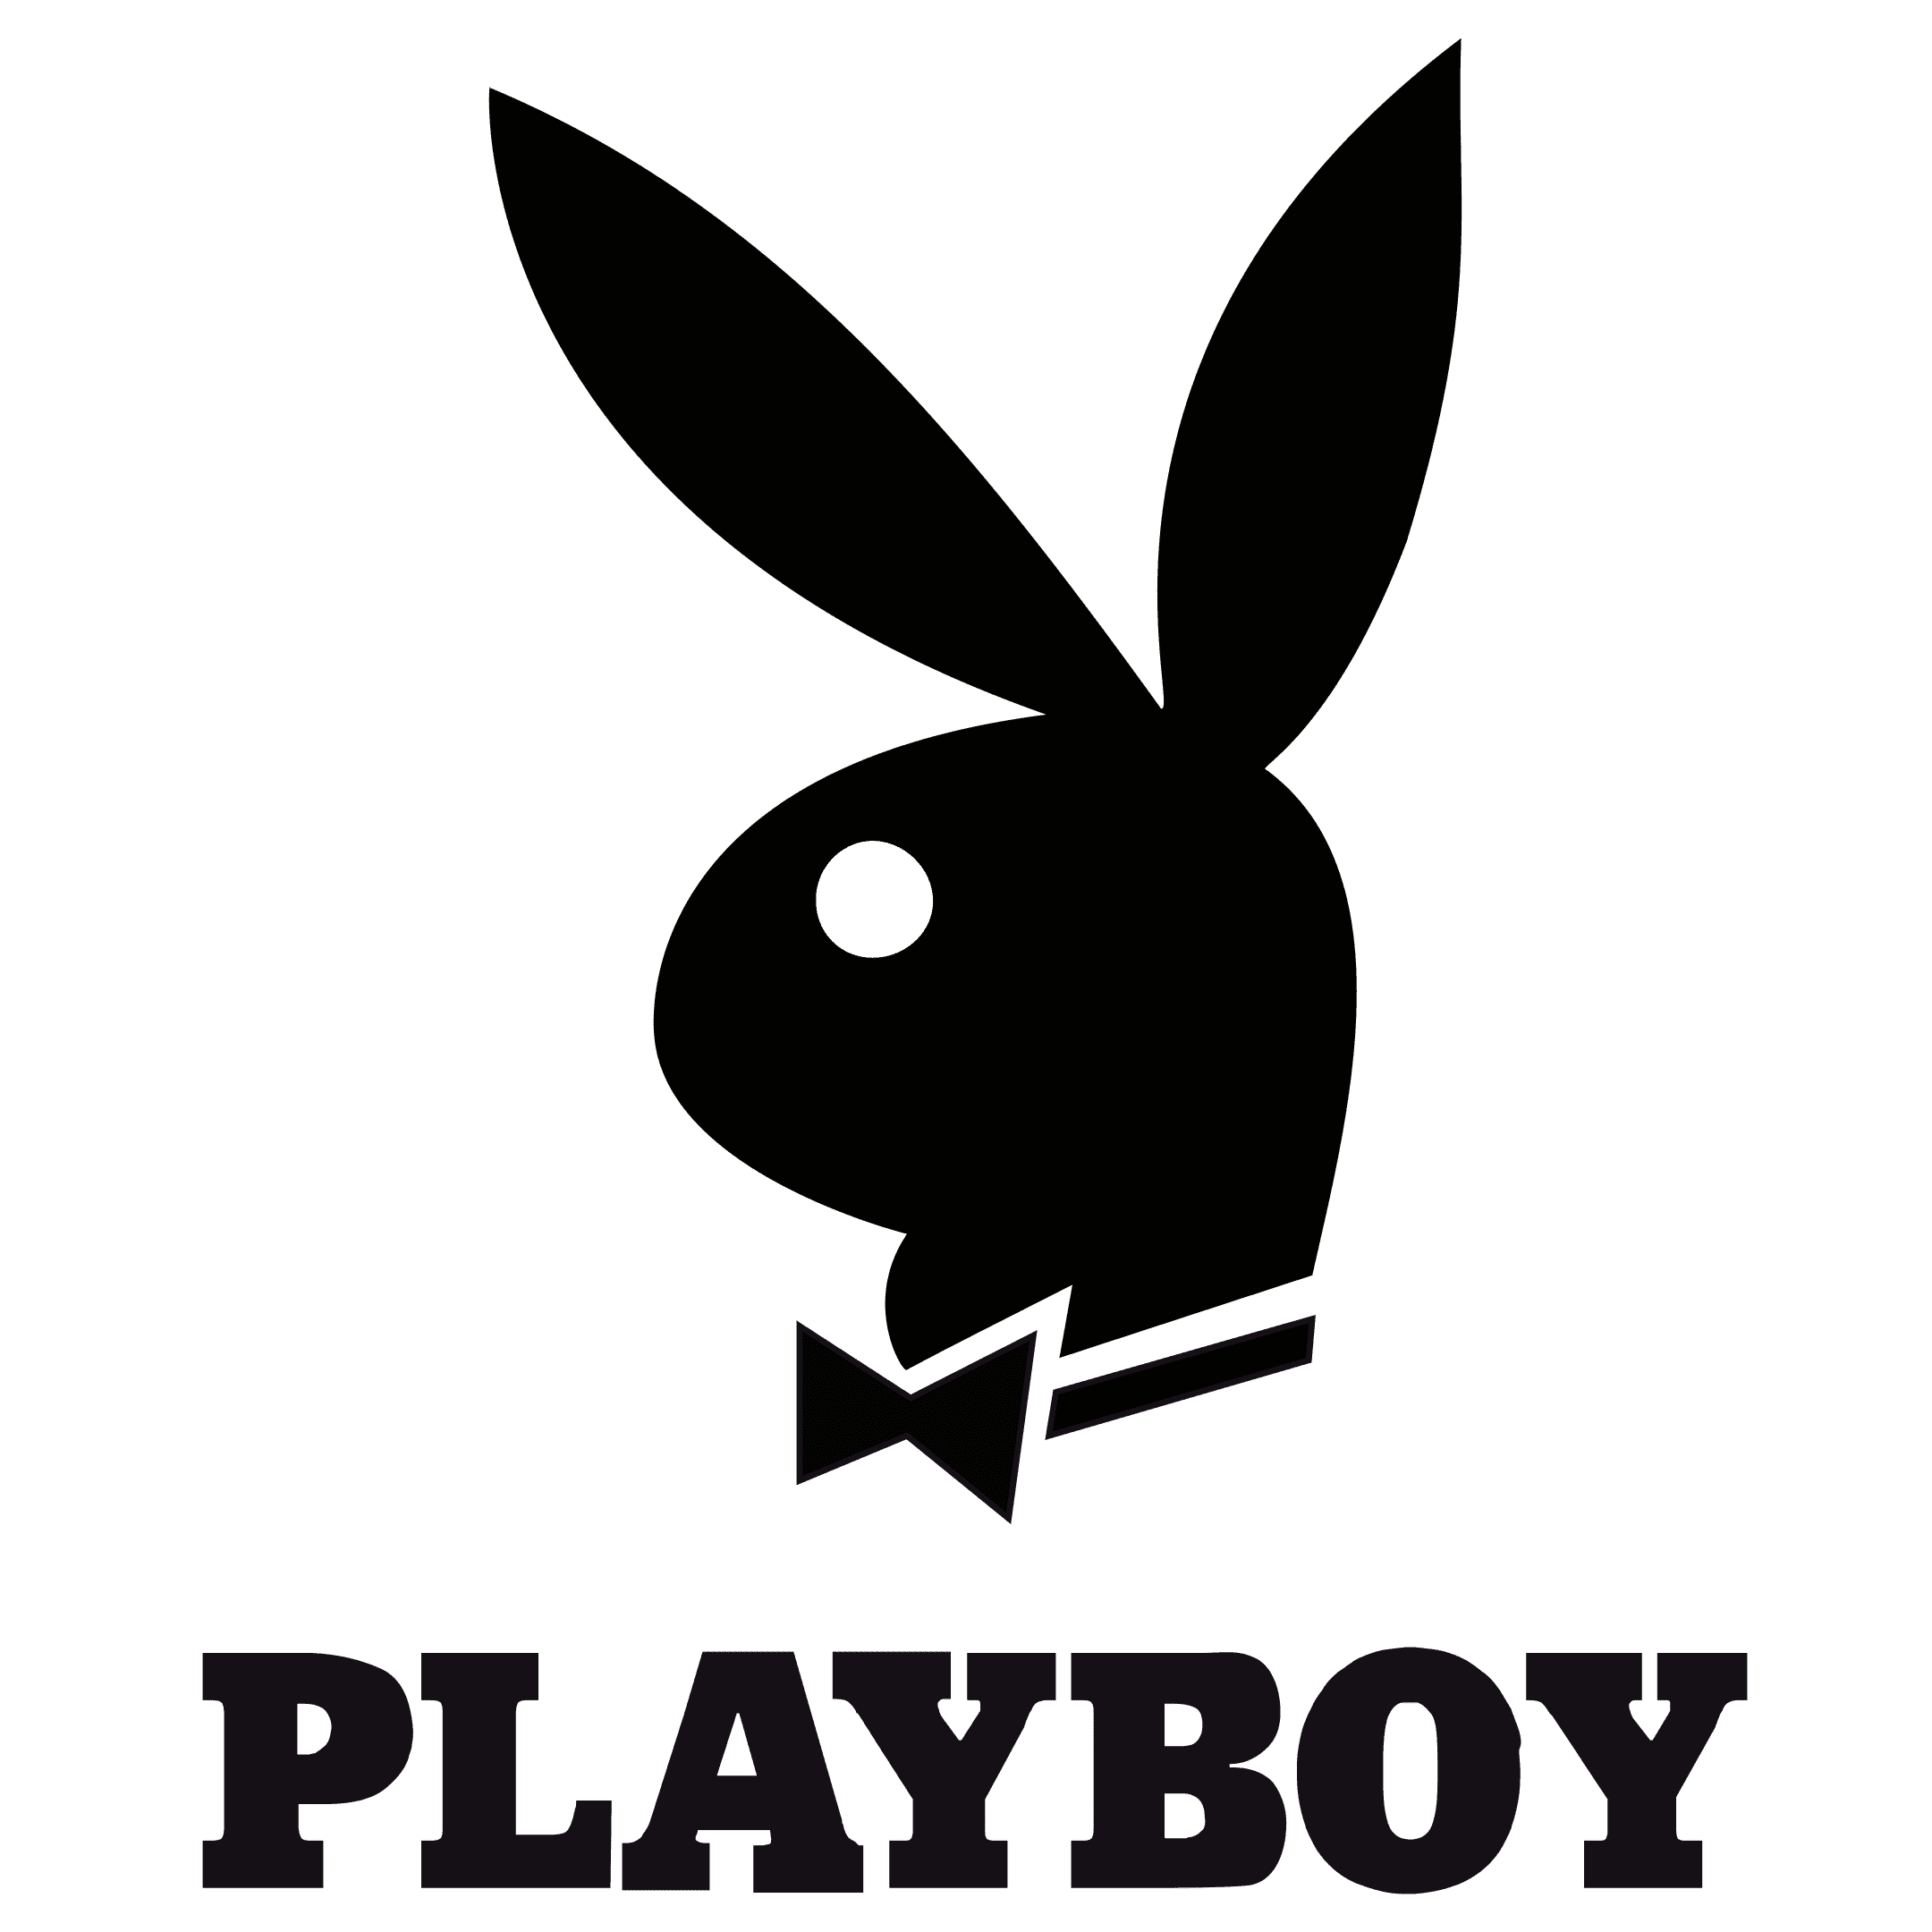 Playboy logo.